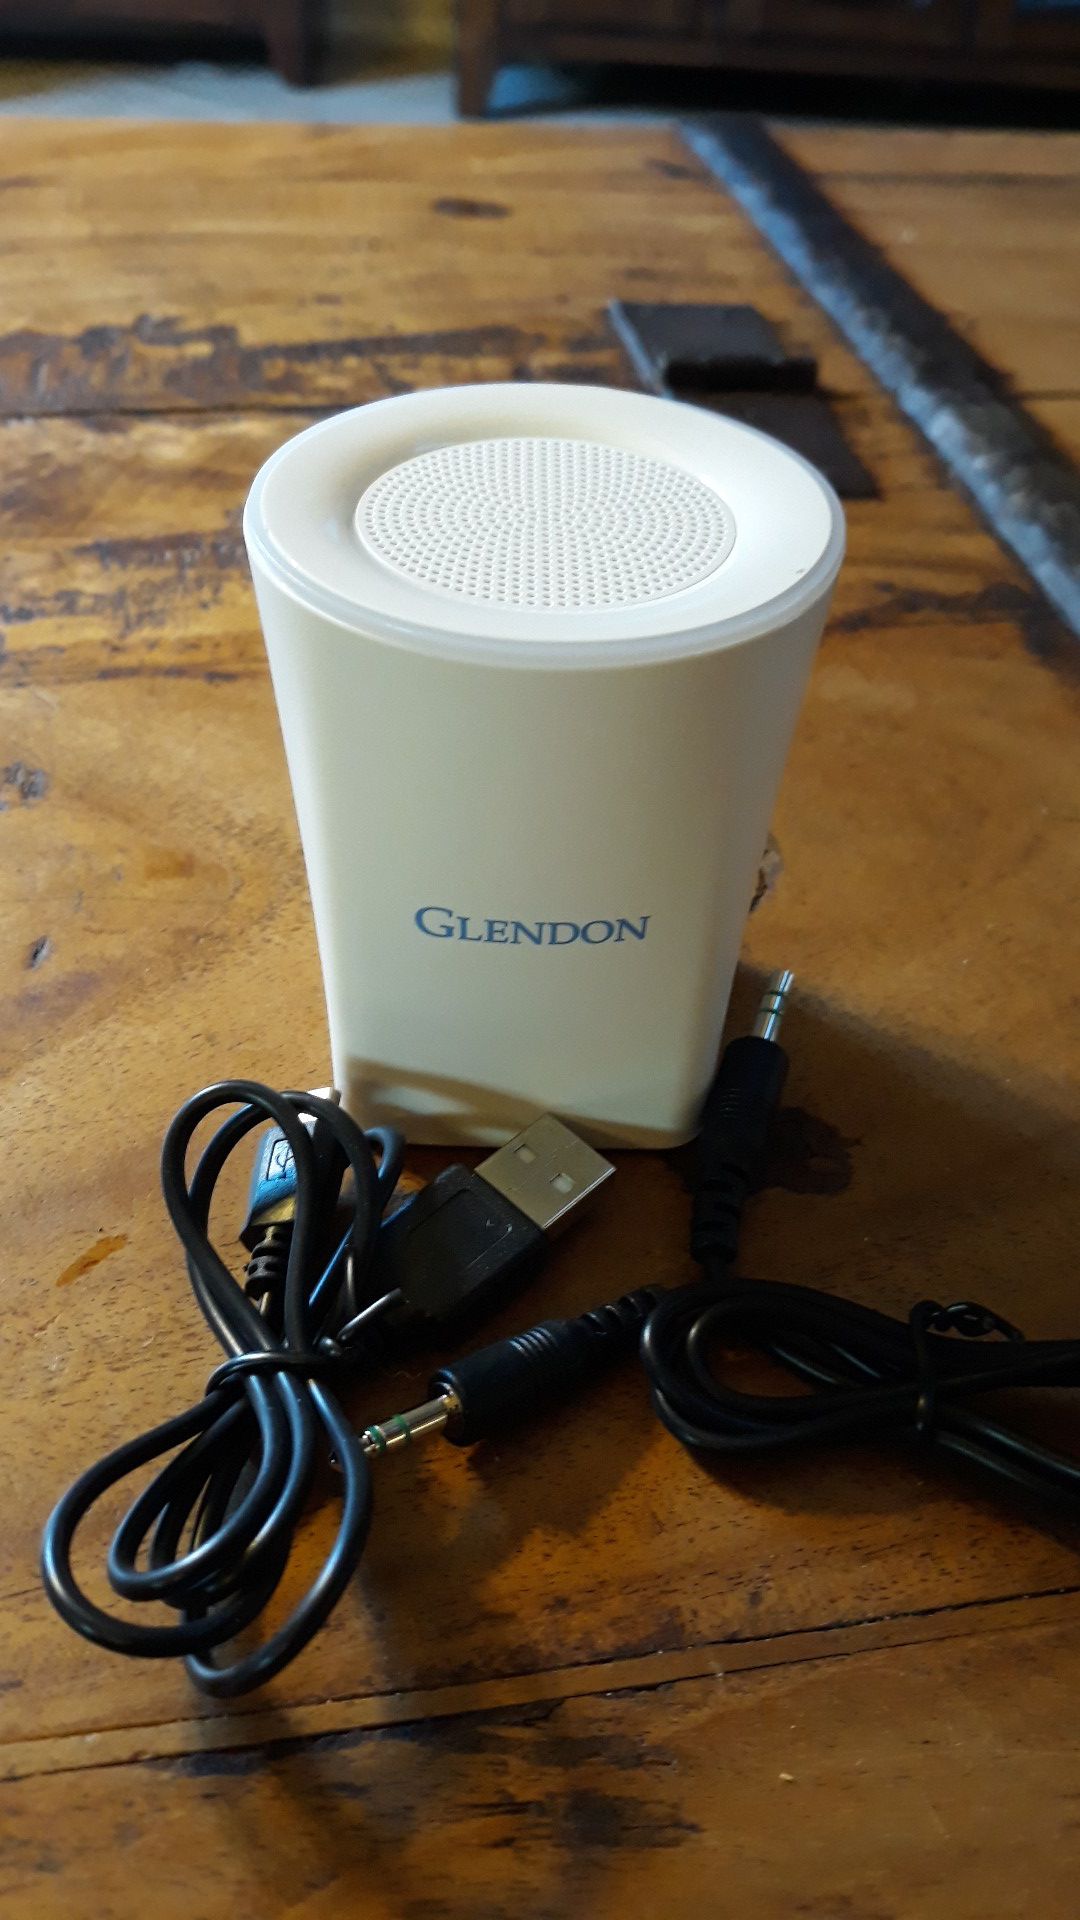 Glendon Bluetooth speaker